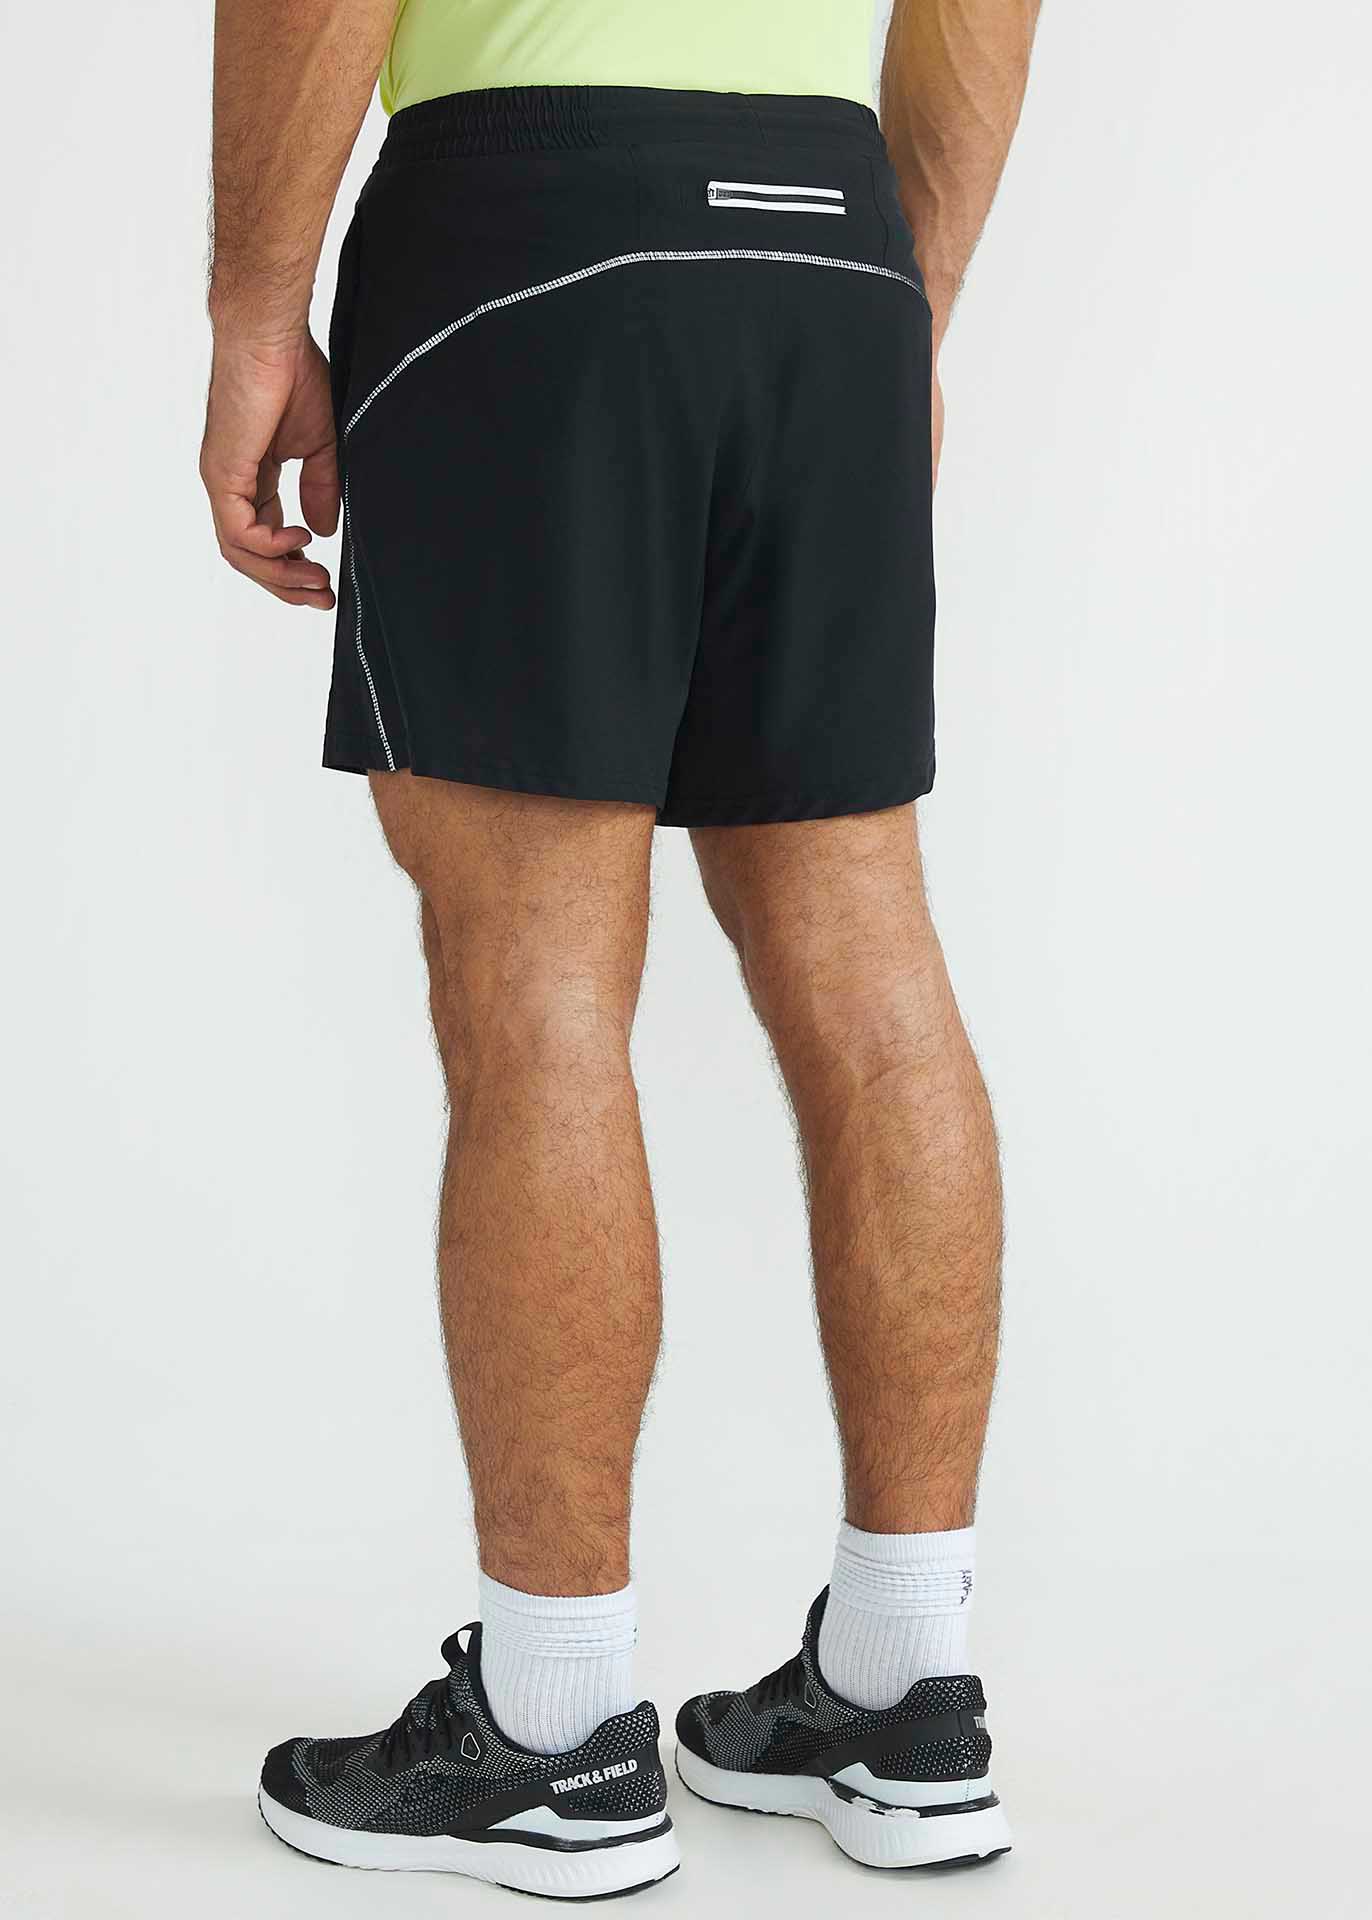 Shorts Curto Laser Preto com bermuda interna de compressão - Roupa  Masculina